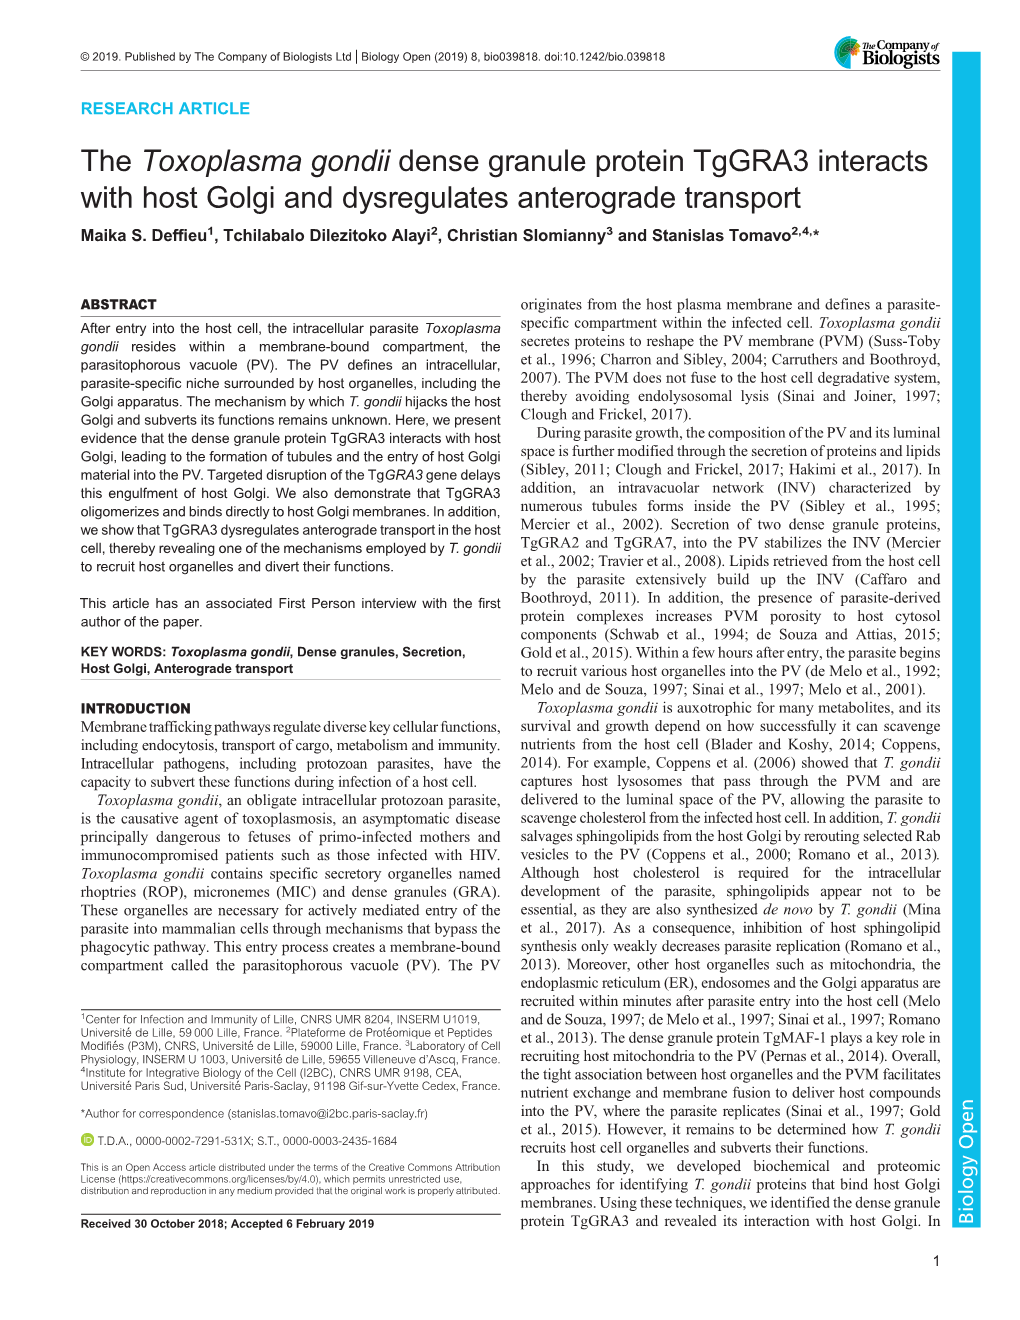 The Toxoplasma Gondii Dense Granule Protein Tggra3 Interacts with Host Golgi and Dysregulates Anterograde Transport Maika S